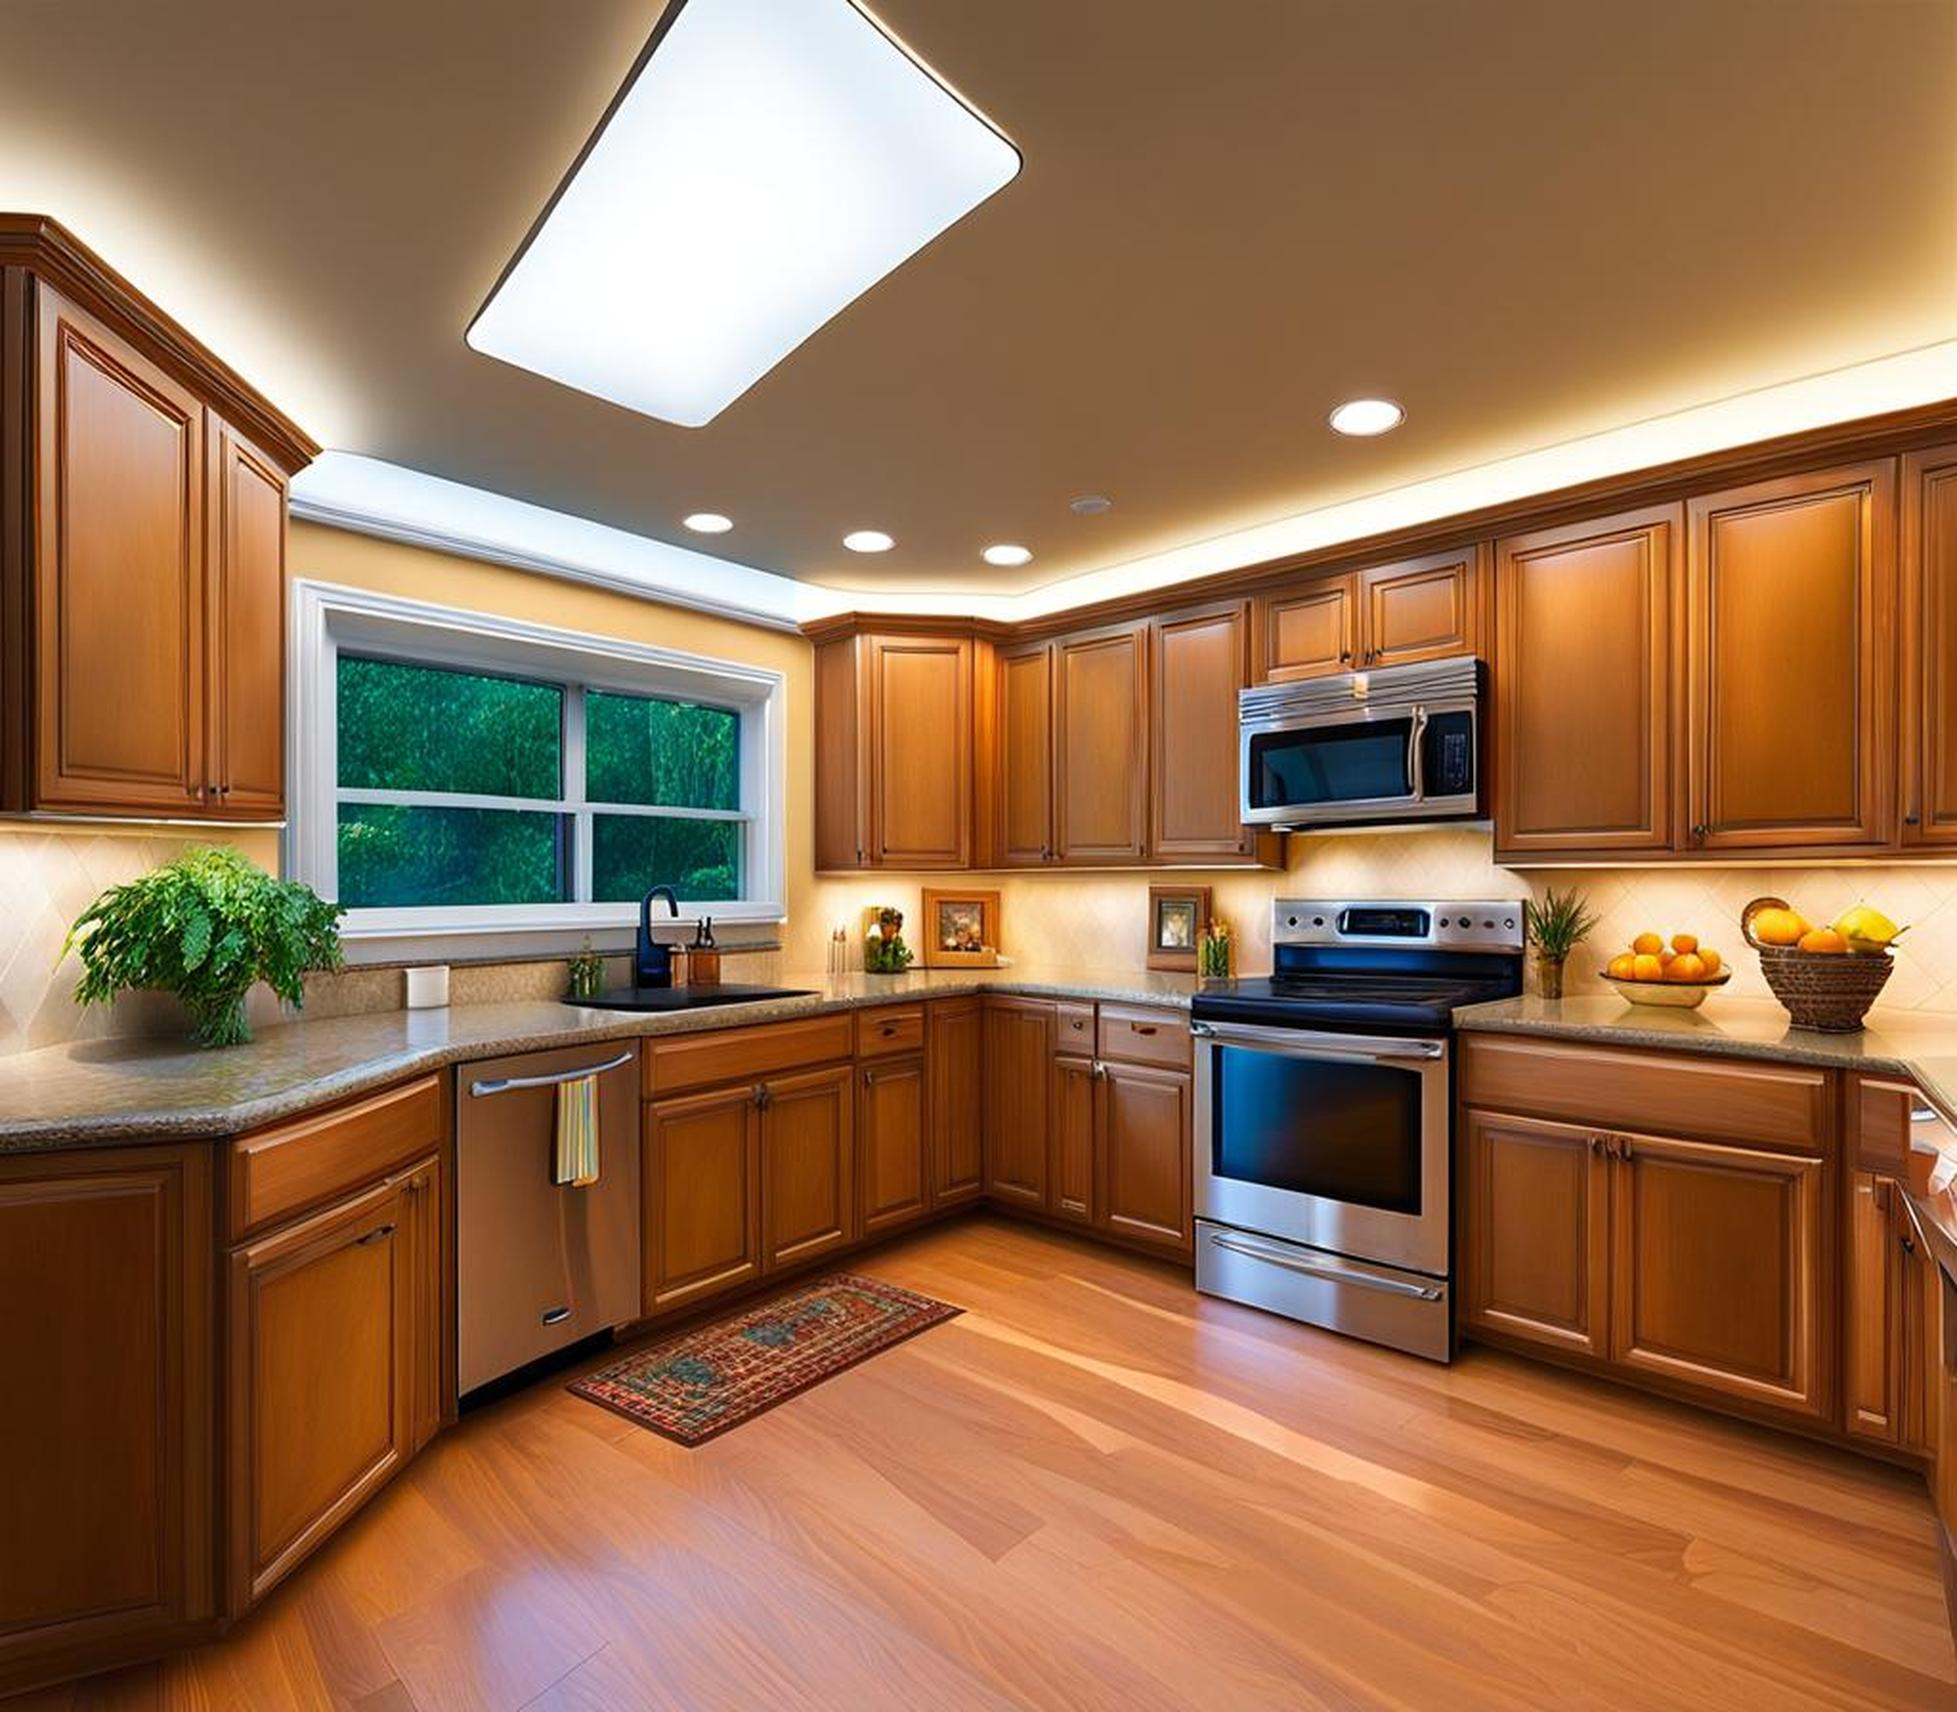 how to update fluorescent lighting in kitchen